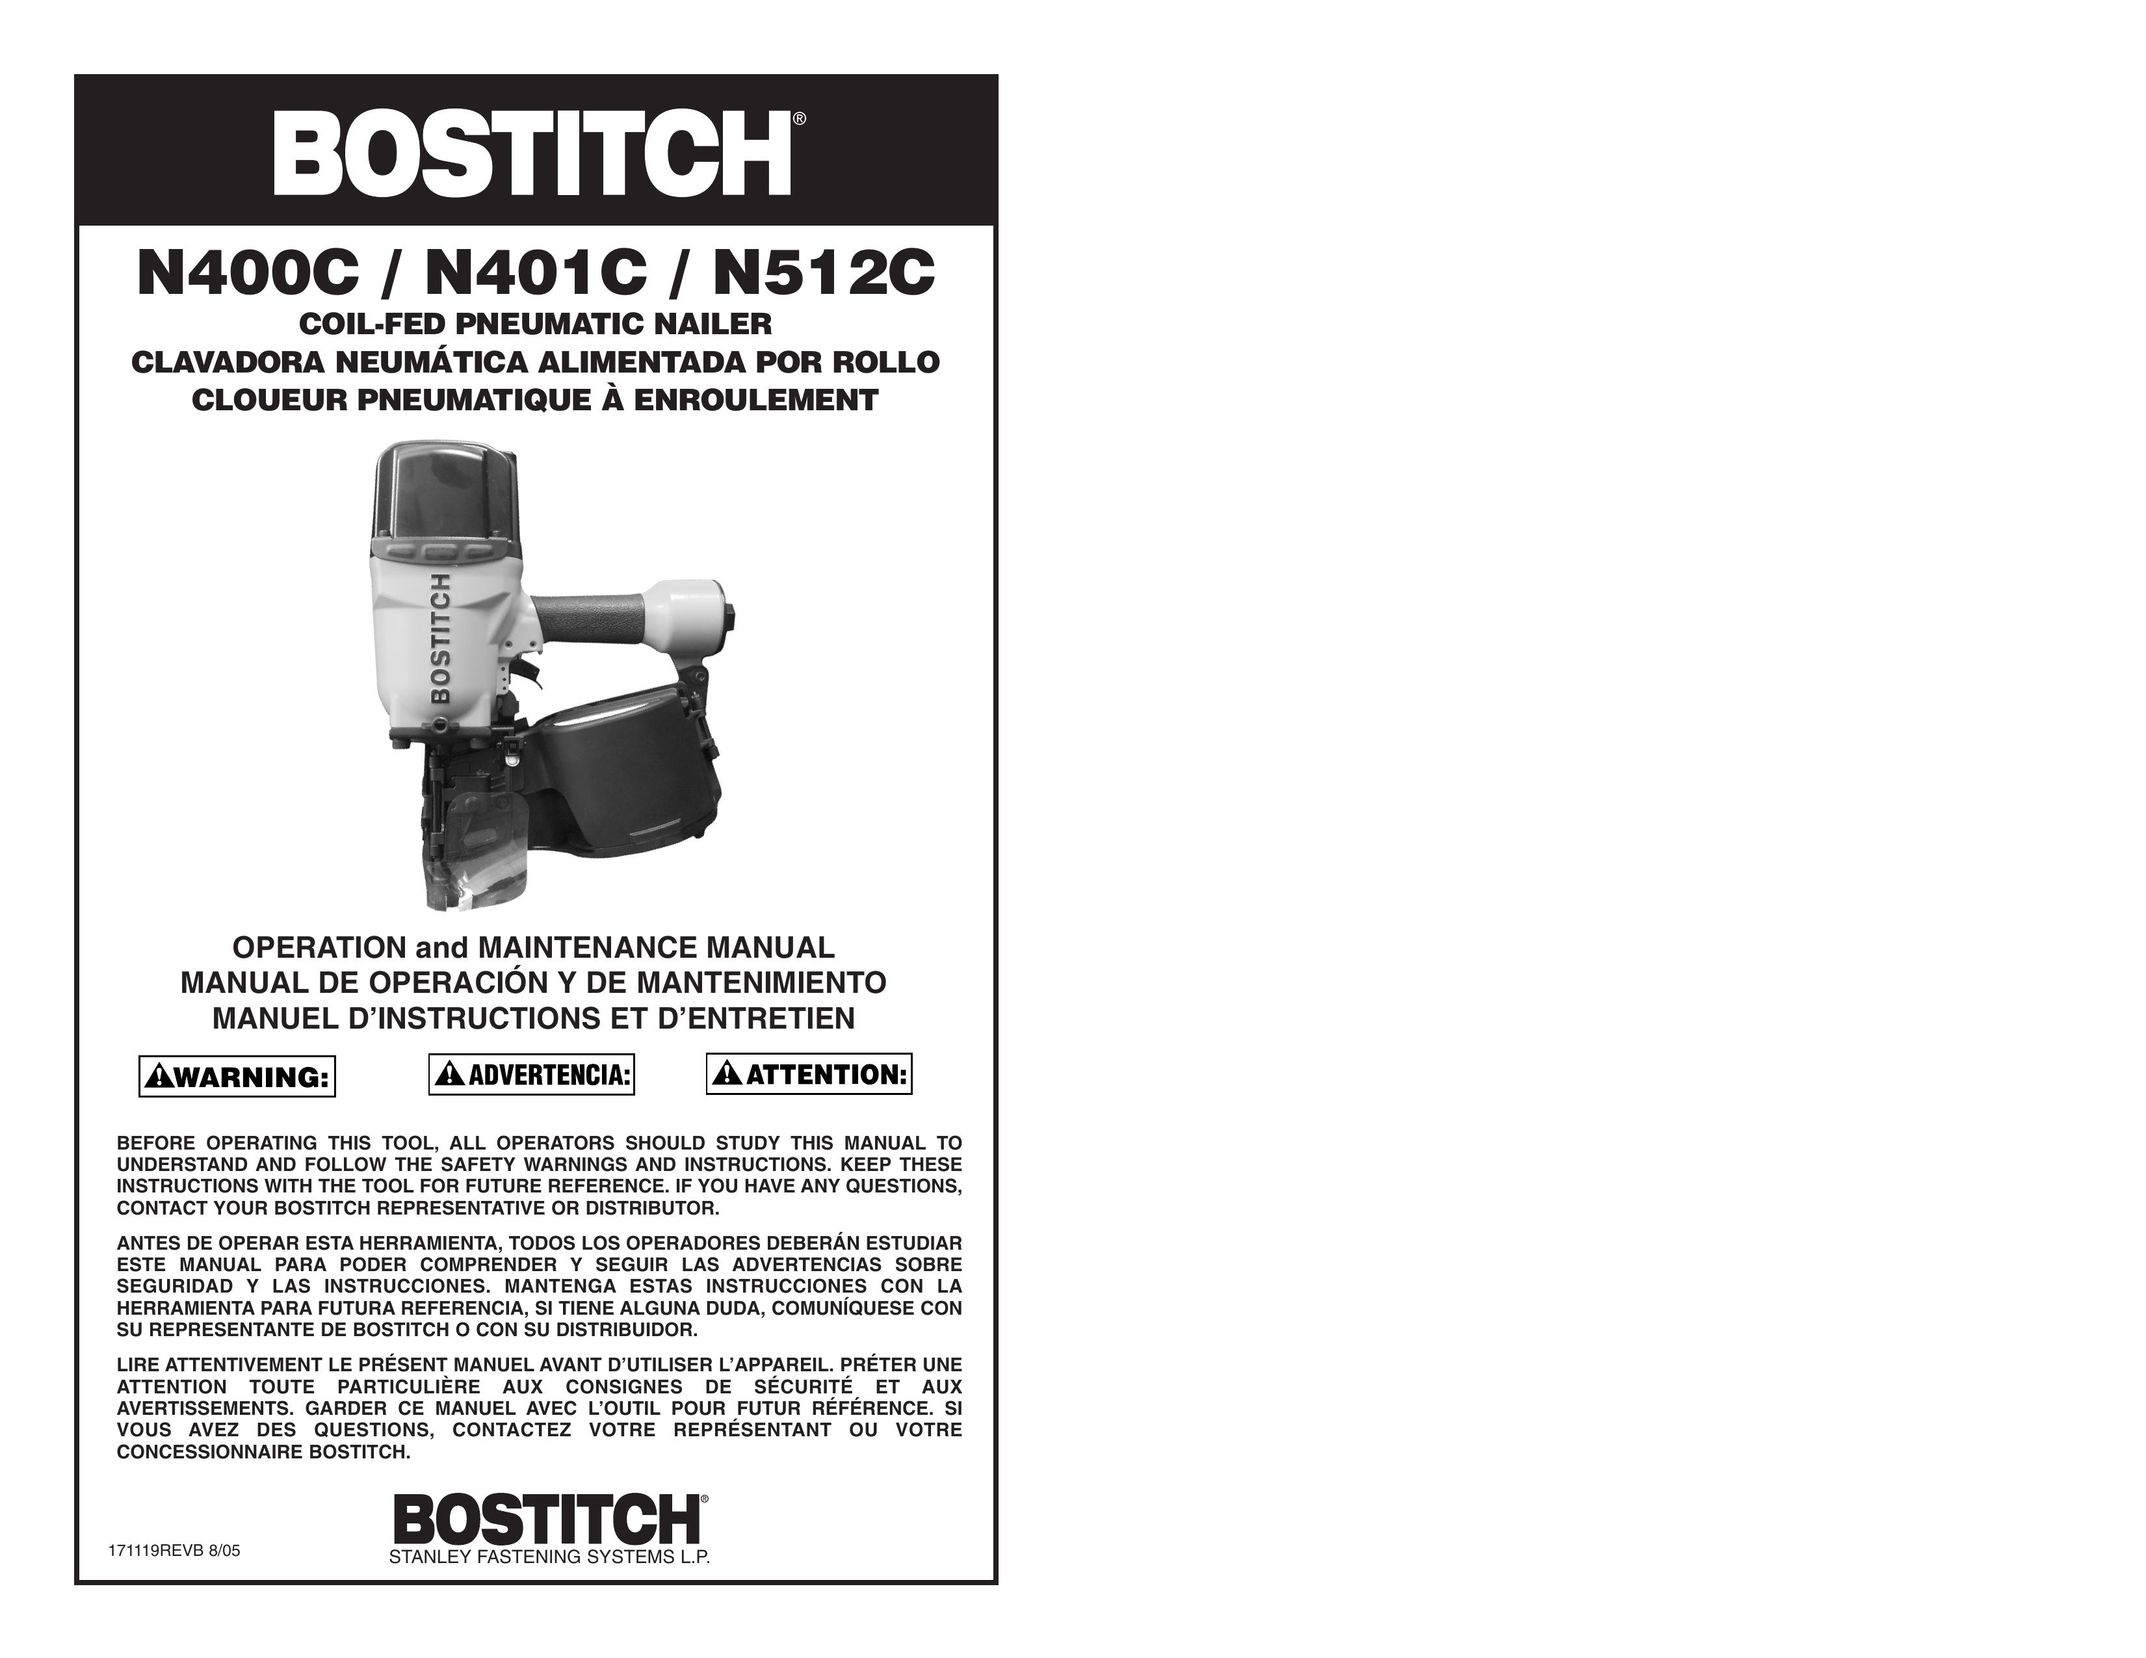 Bostitch N401C Nail Gun User Manual